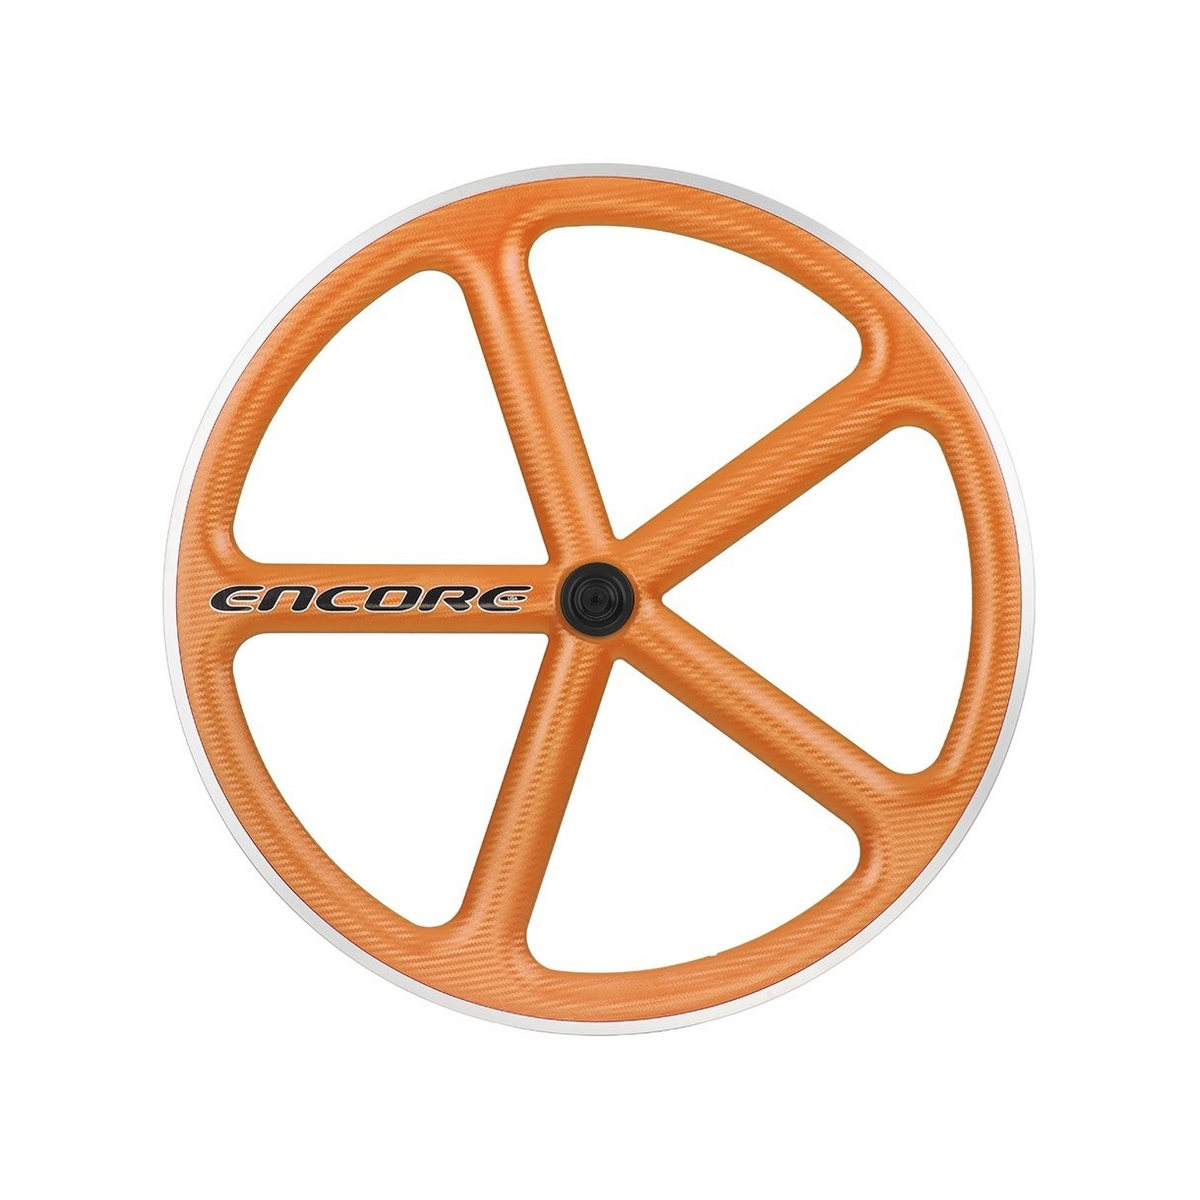 roue avant 700c track 5 rayons carbone tissage orange msw